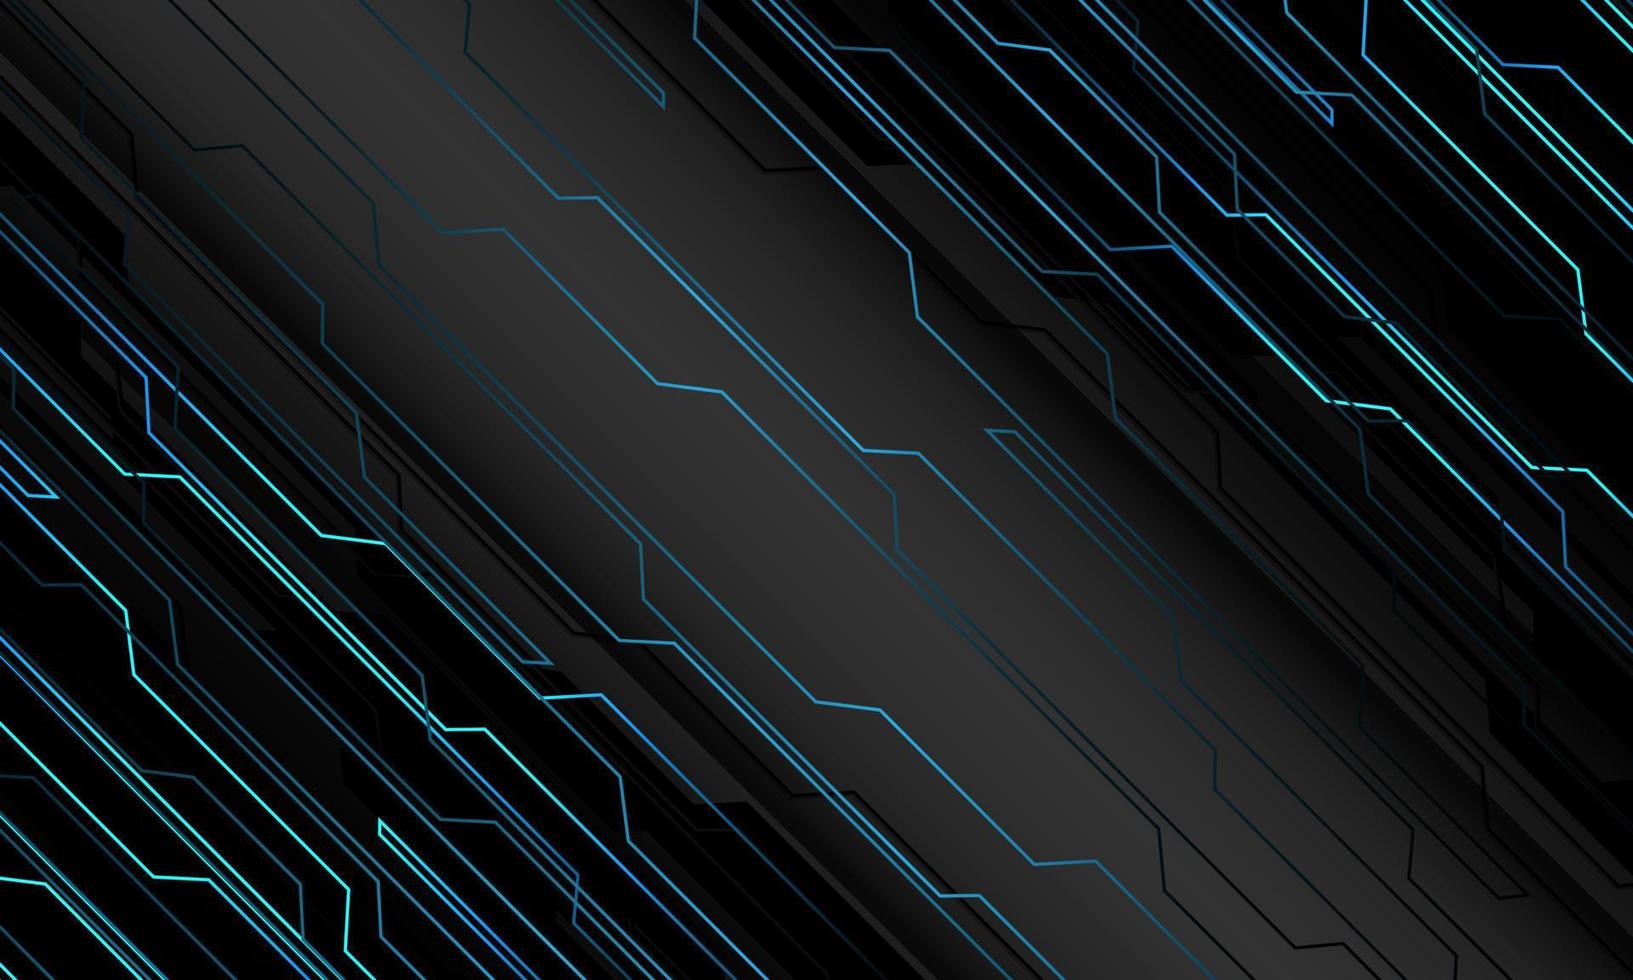 abstract blauw zwart cyber meetkundig dynamisch Aan wit met blanco ruimte futuristische ontwerp modern technologie achtergrond vector